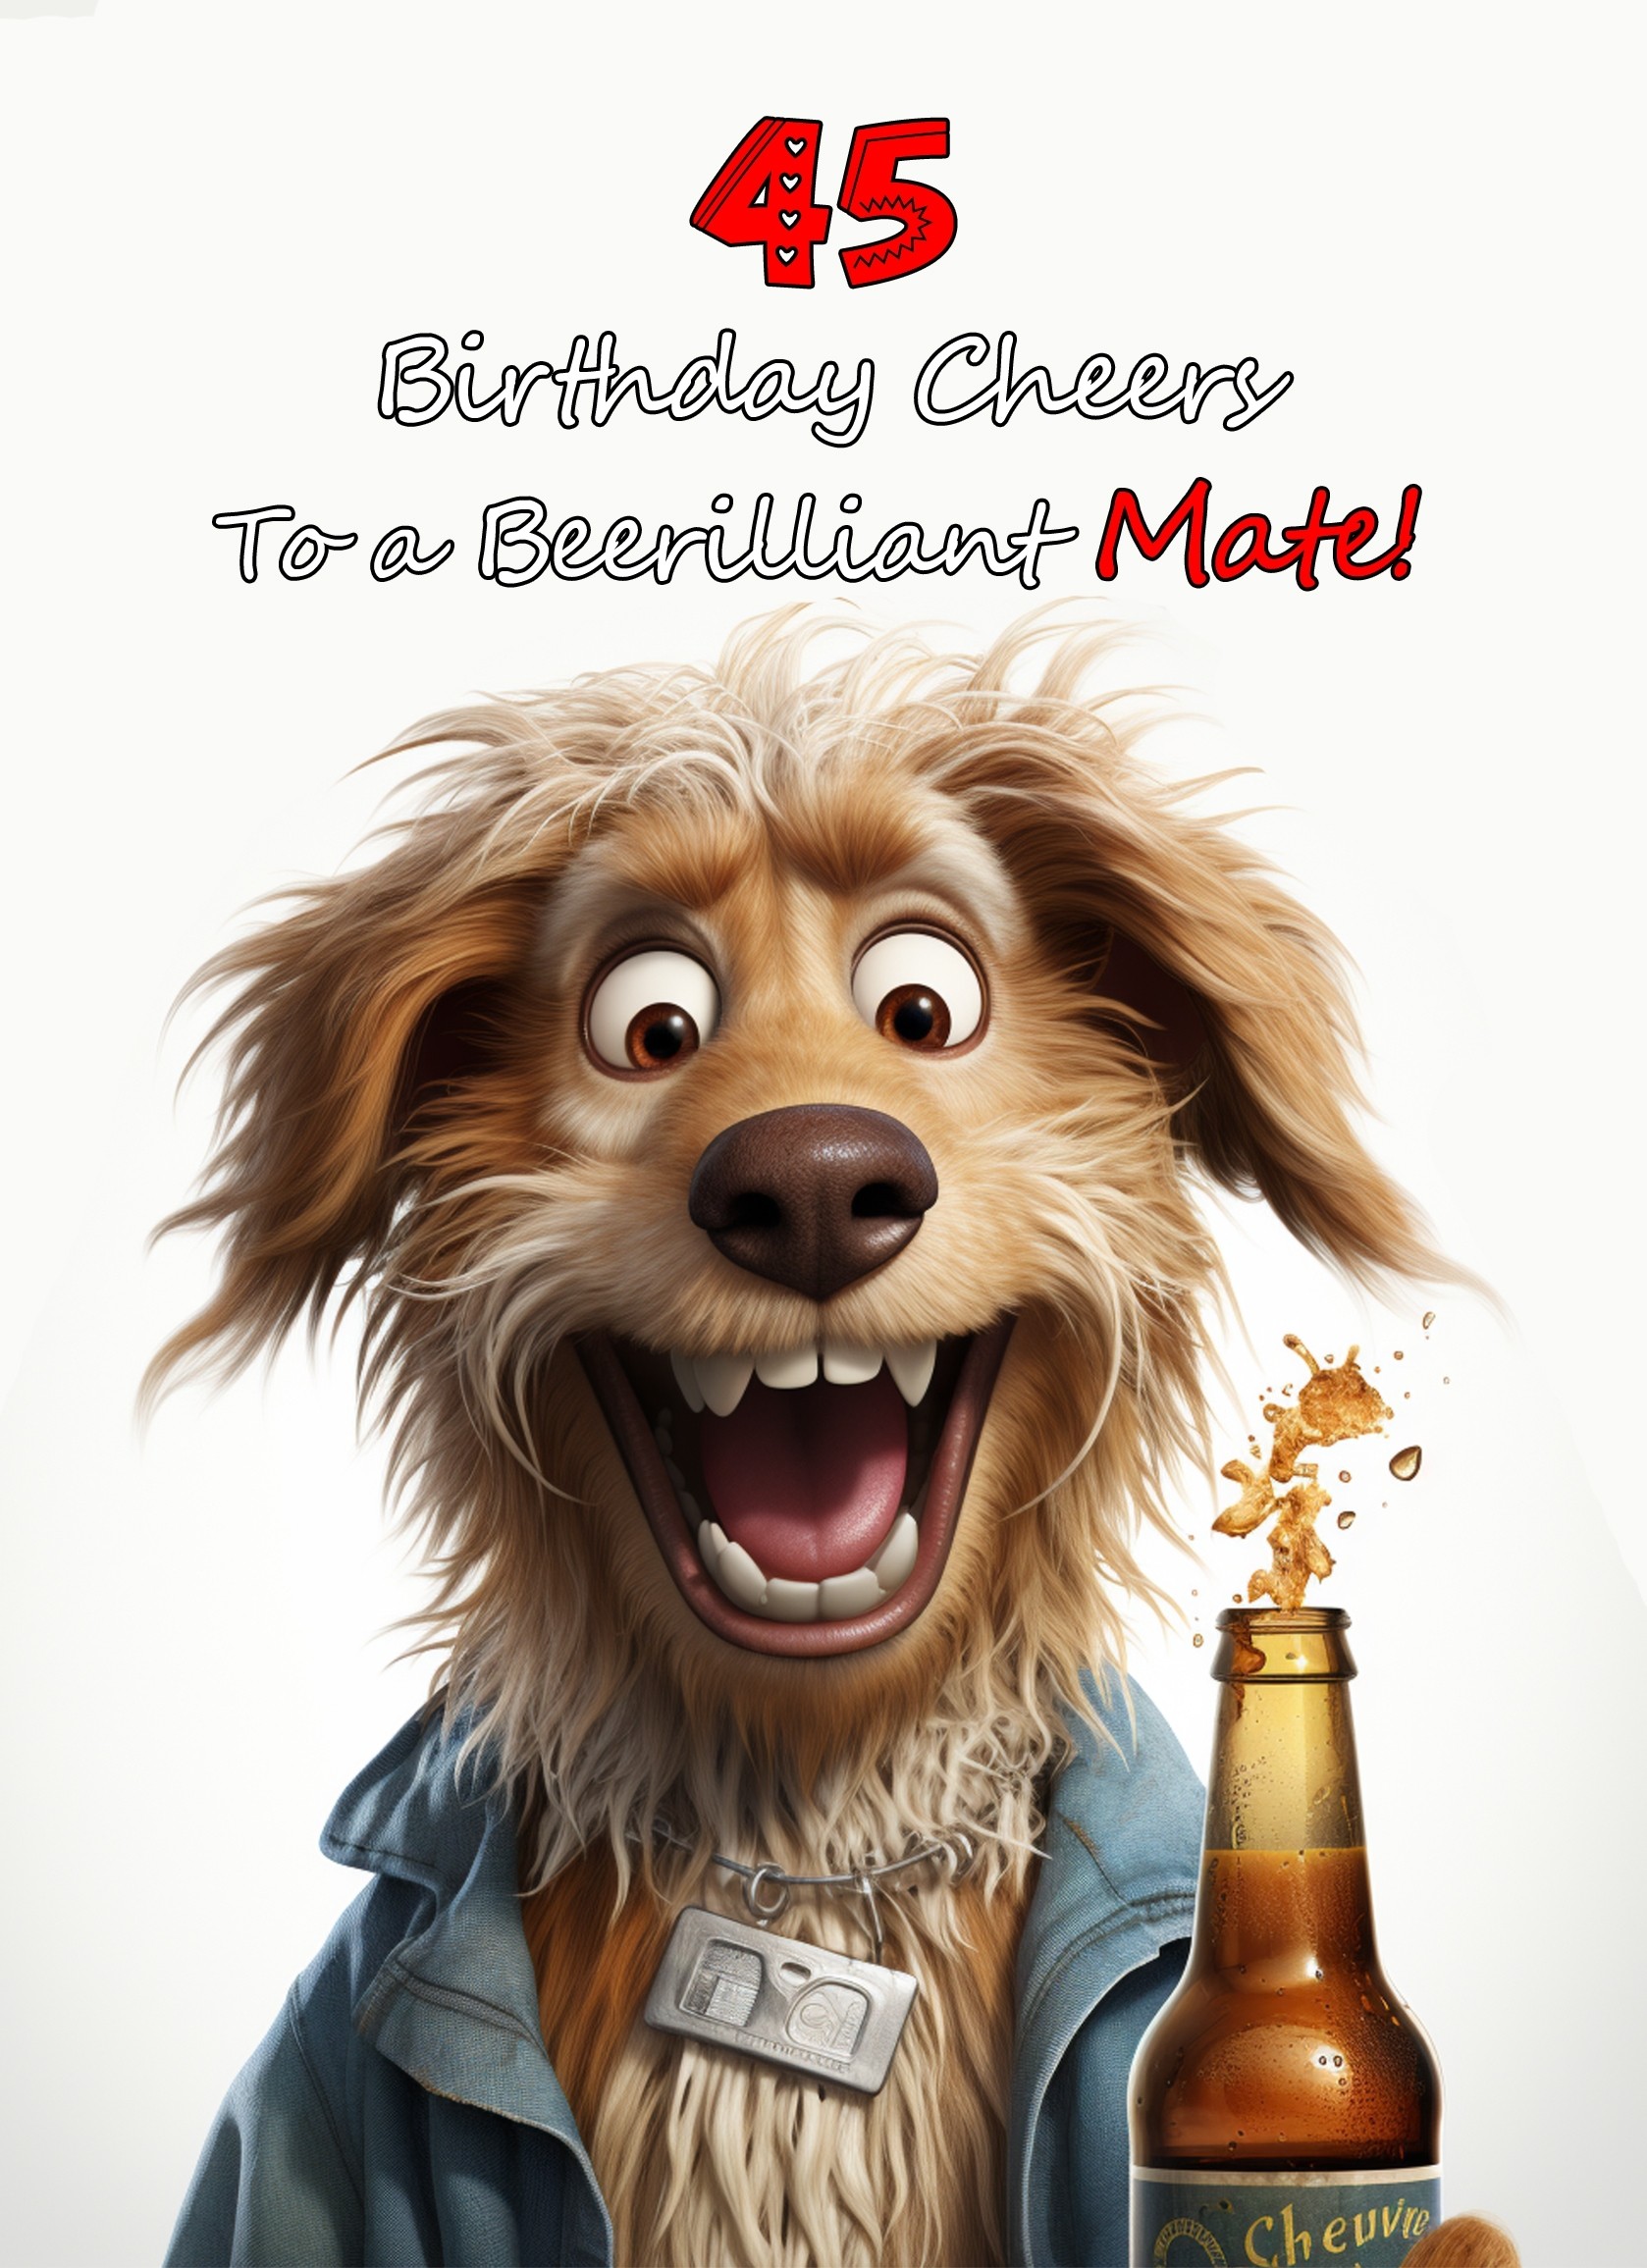 Mate 45th Birthday Card (Funny Beerilliant Birthday Cheers)